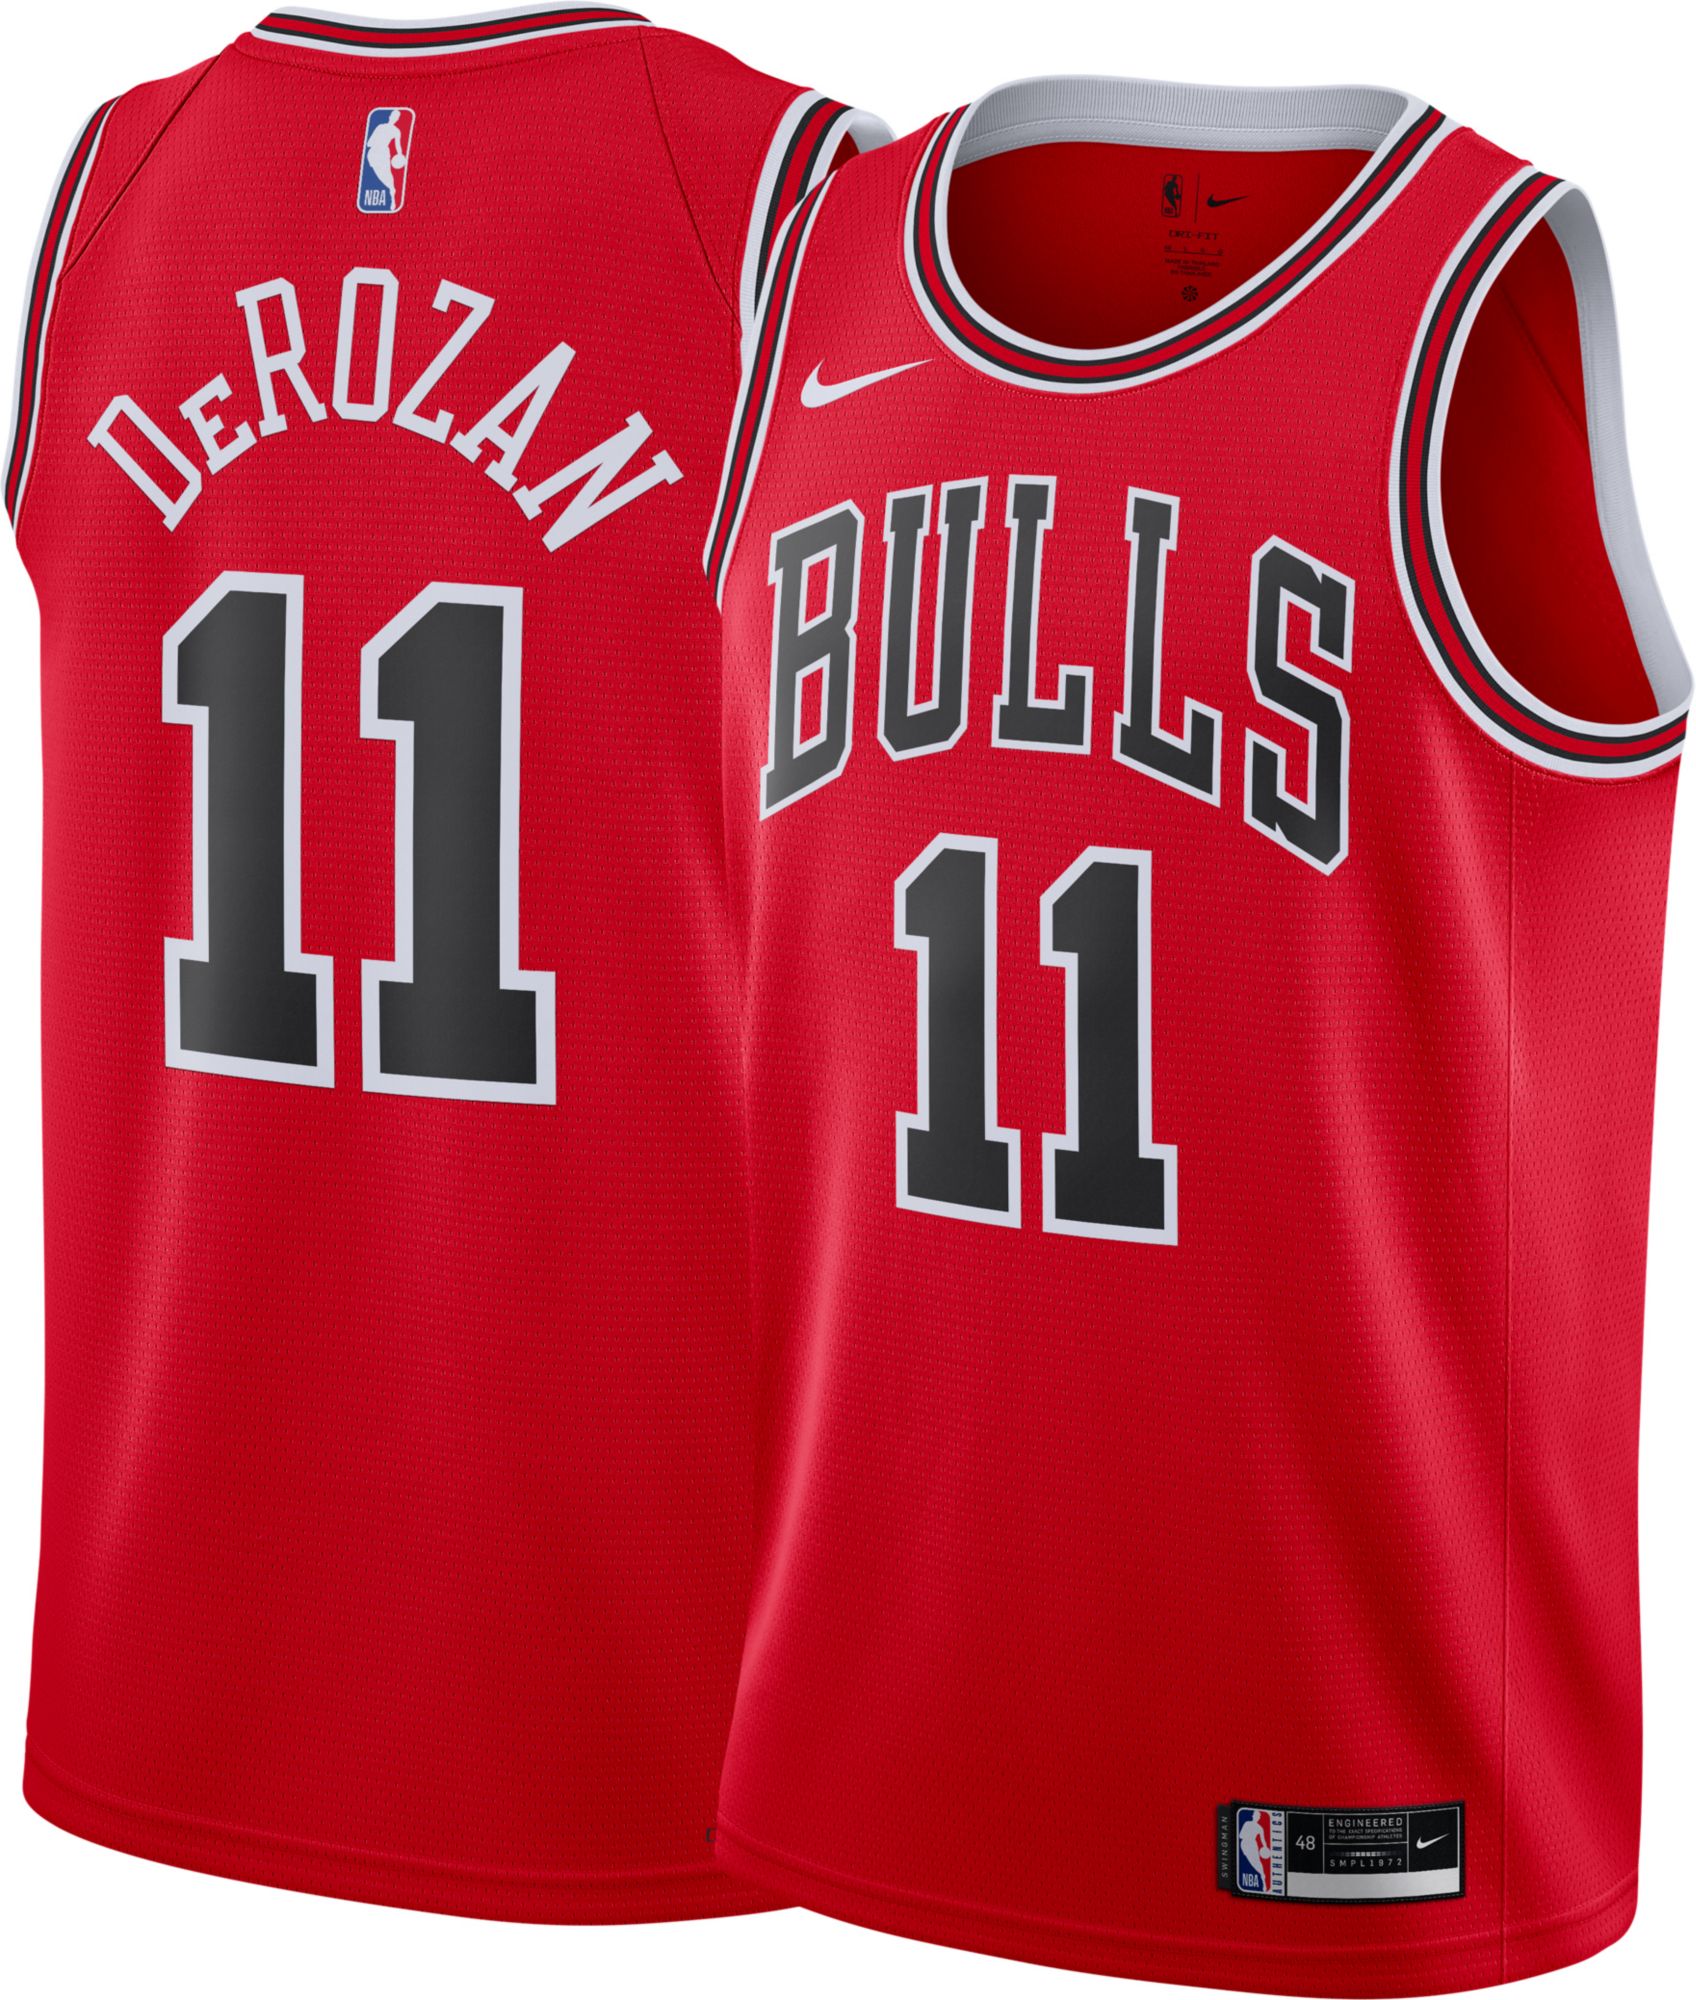 Chicago Bulls Nike City Edition Swingman Jersey 22 - White - DeMar DeRozan  - Youth